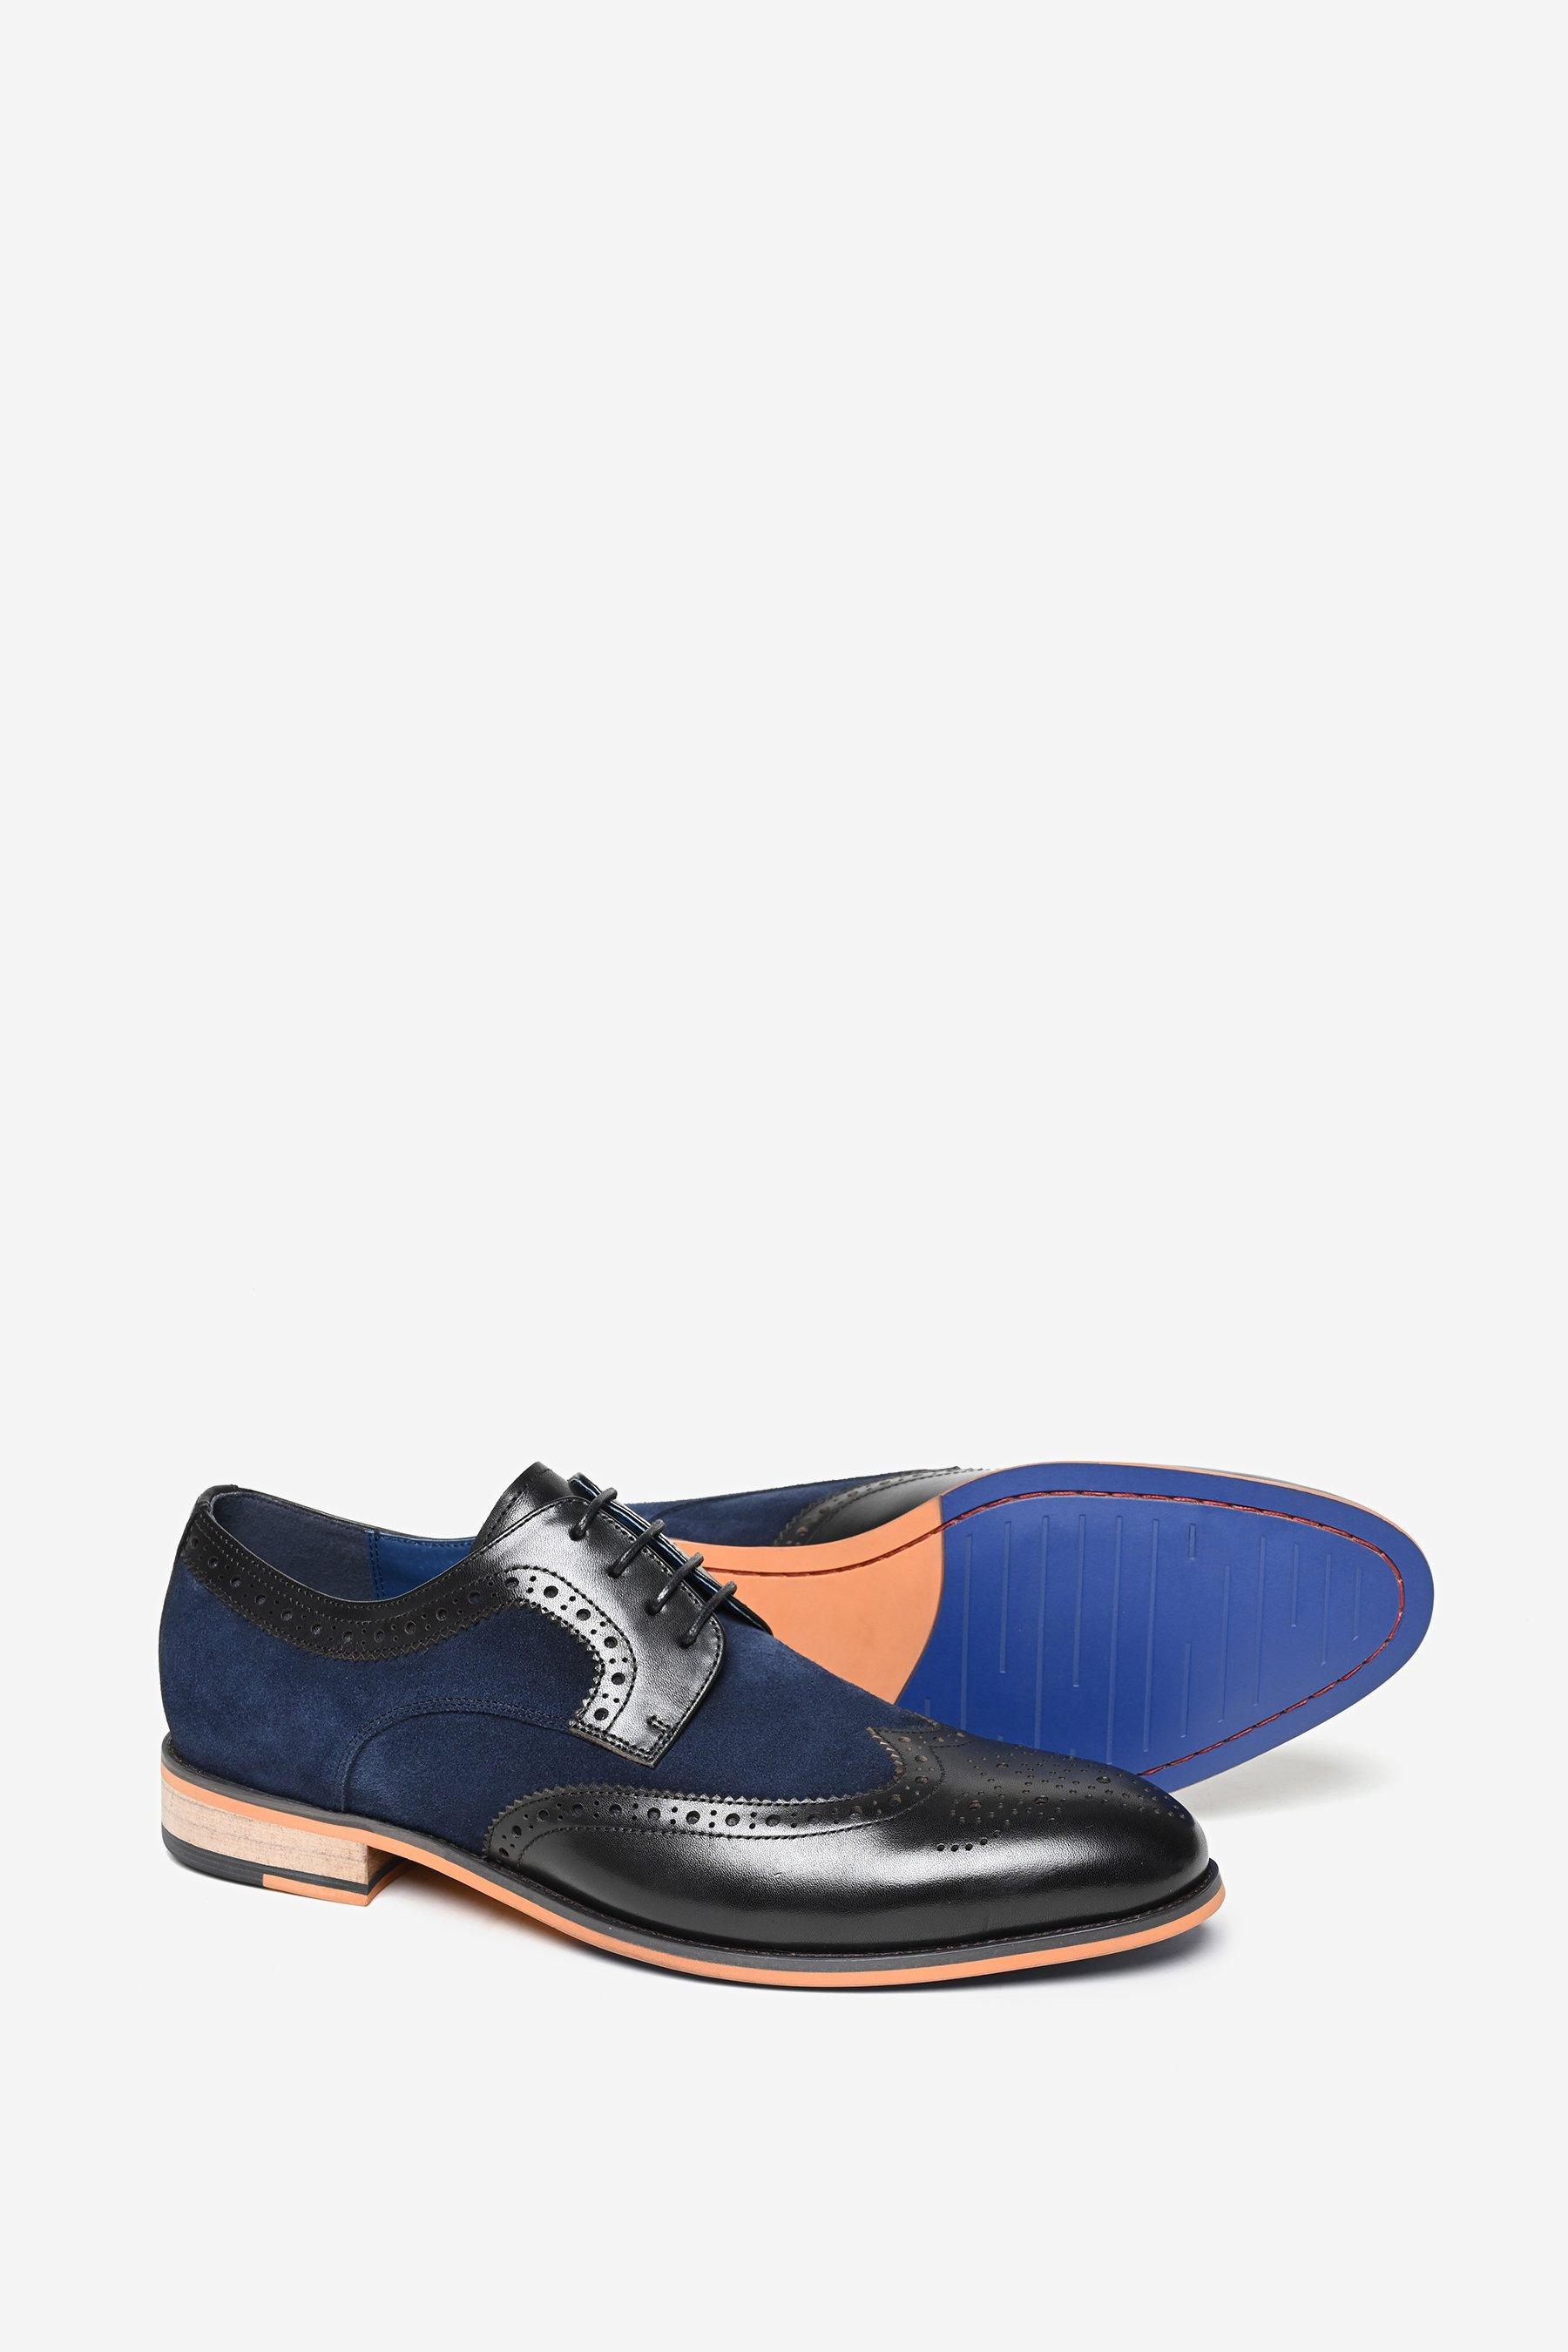 Shoes | 'Hart' Premium Leather Oxford Shoe | Alexander Pace